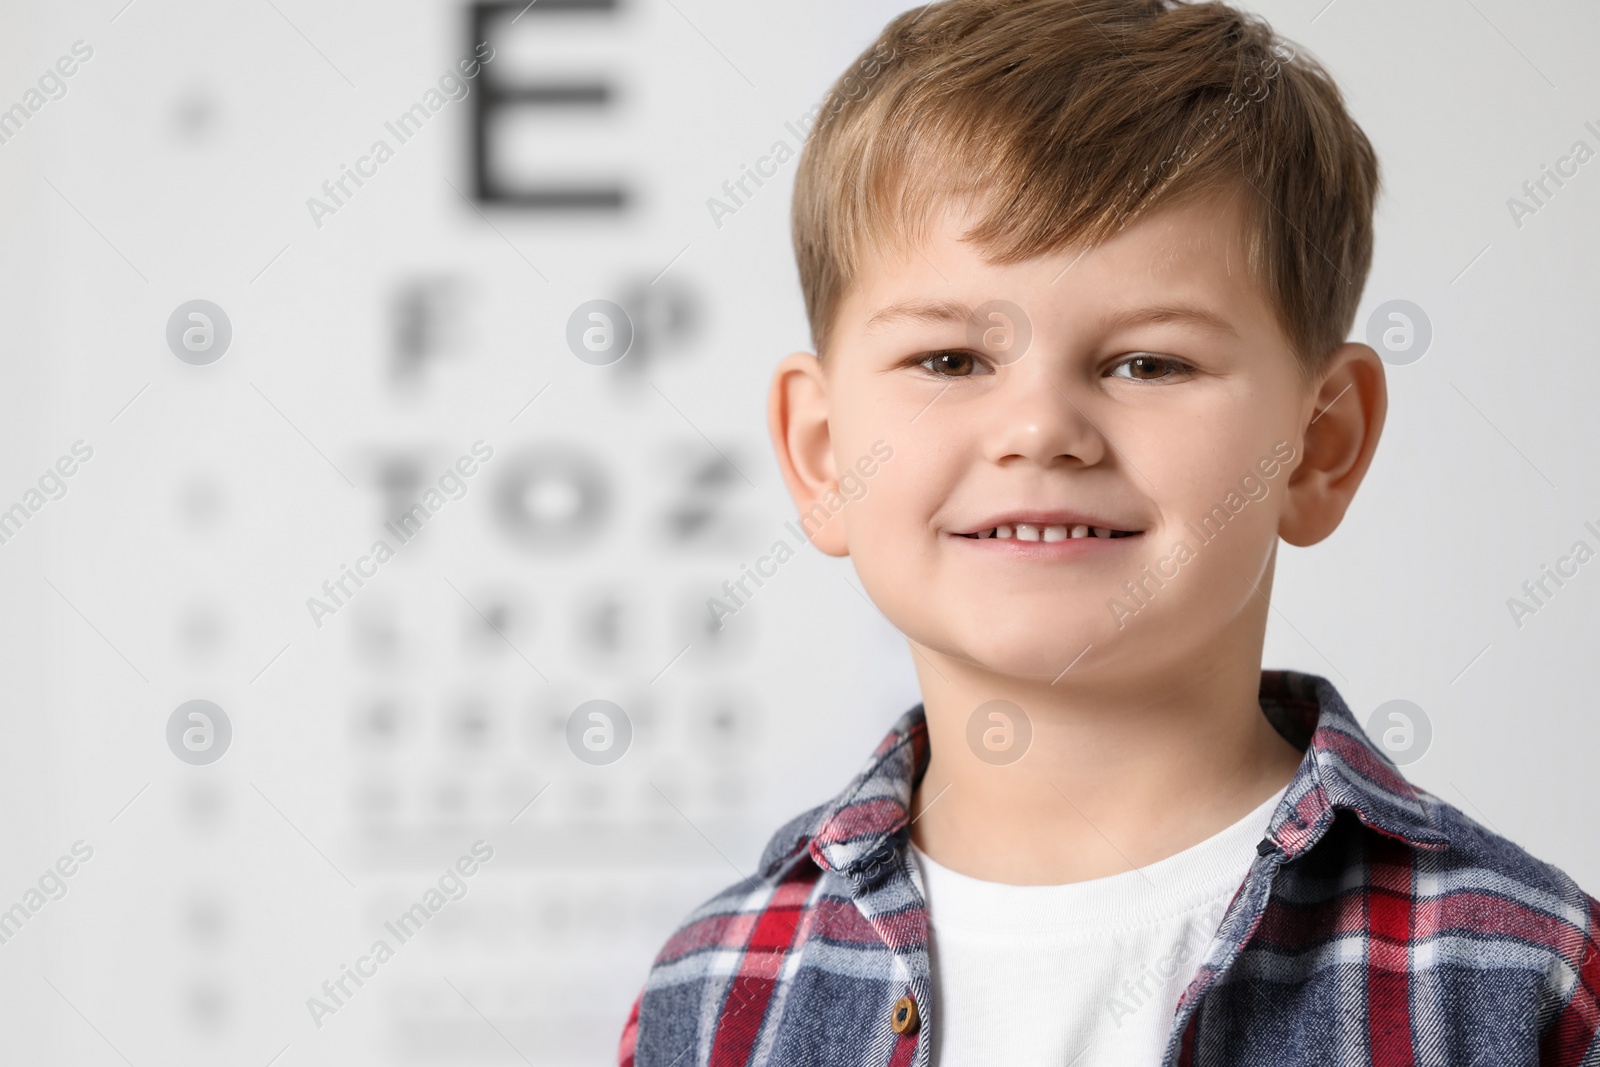 Photo of Cute little boy against vision test chart